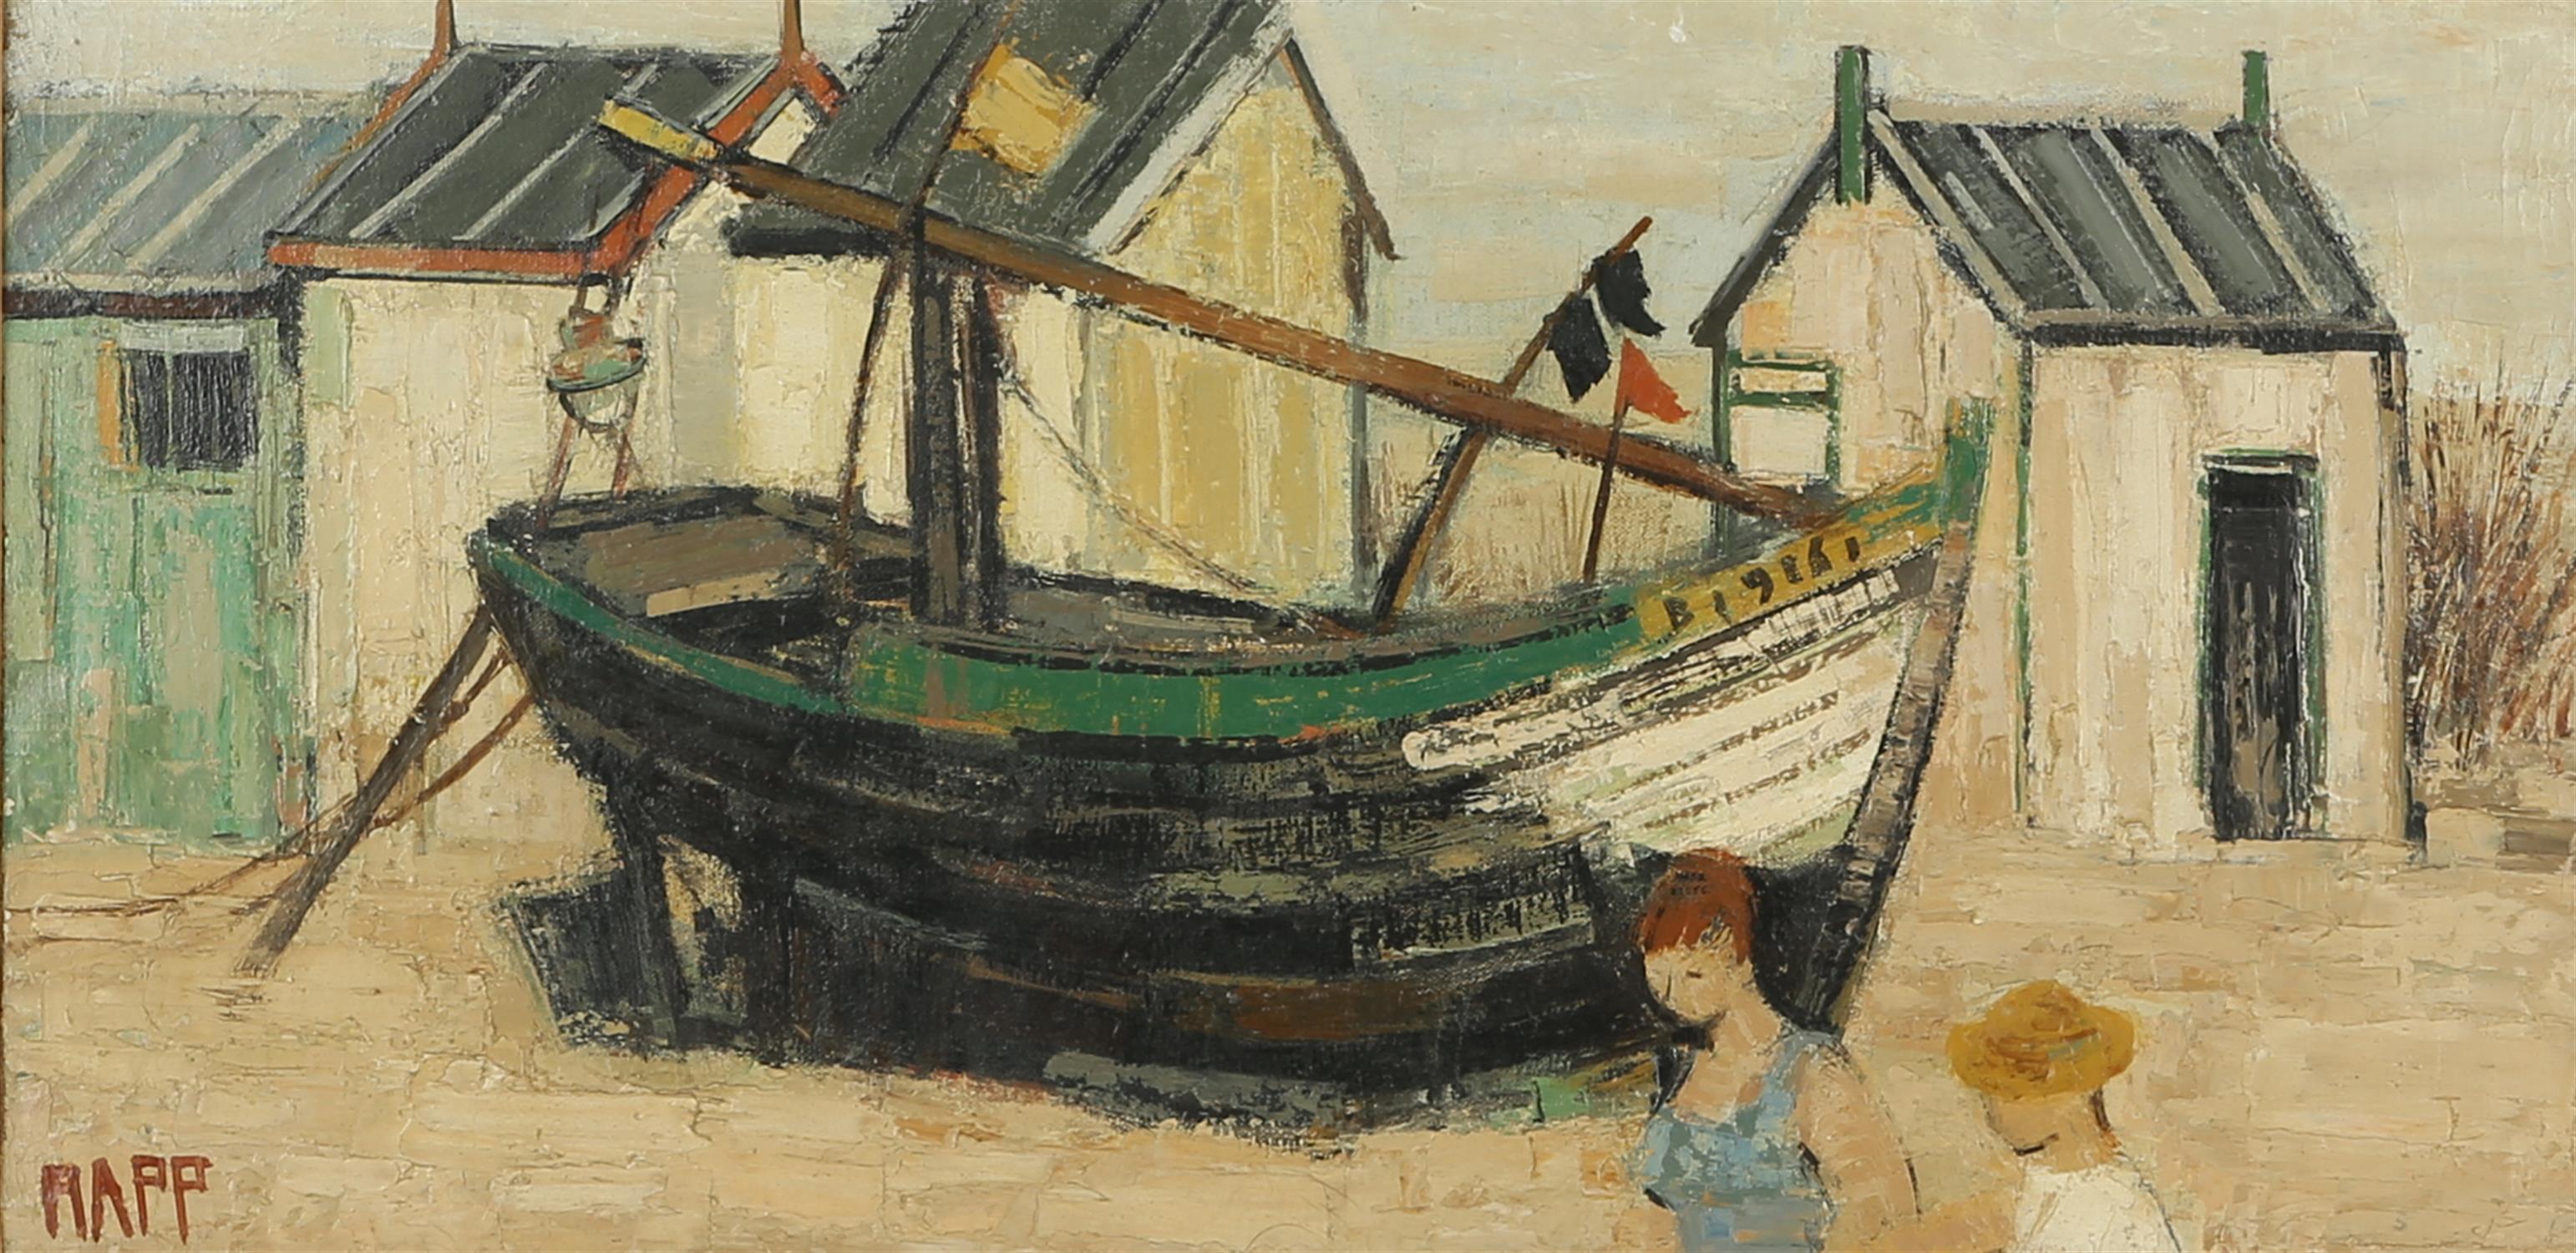 Ginette Rapp (1928-1998), Barque sur la sable, oil on canvas, signed lower left, 31 x 61cm. Framed